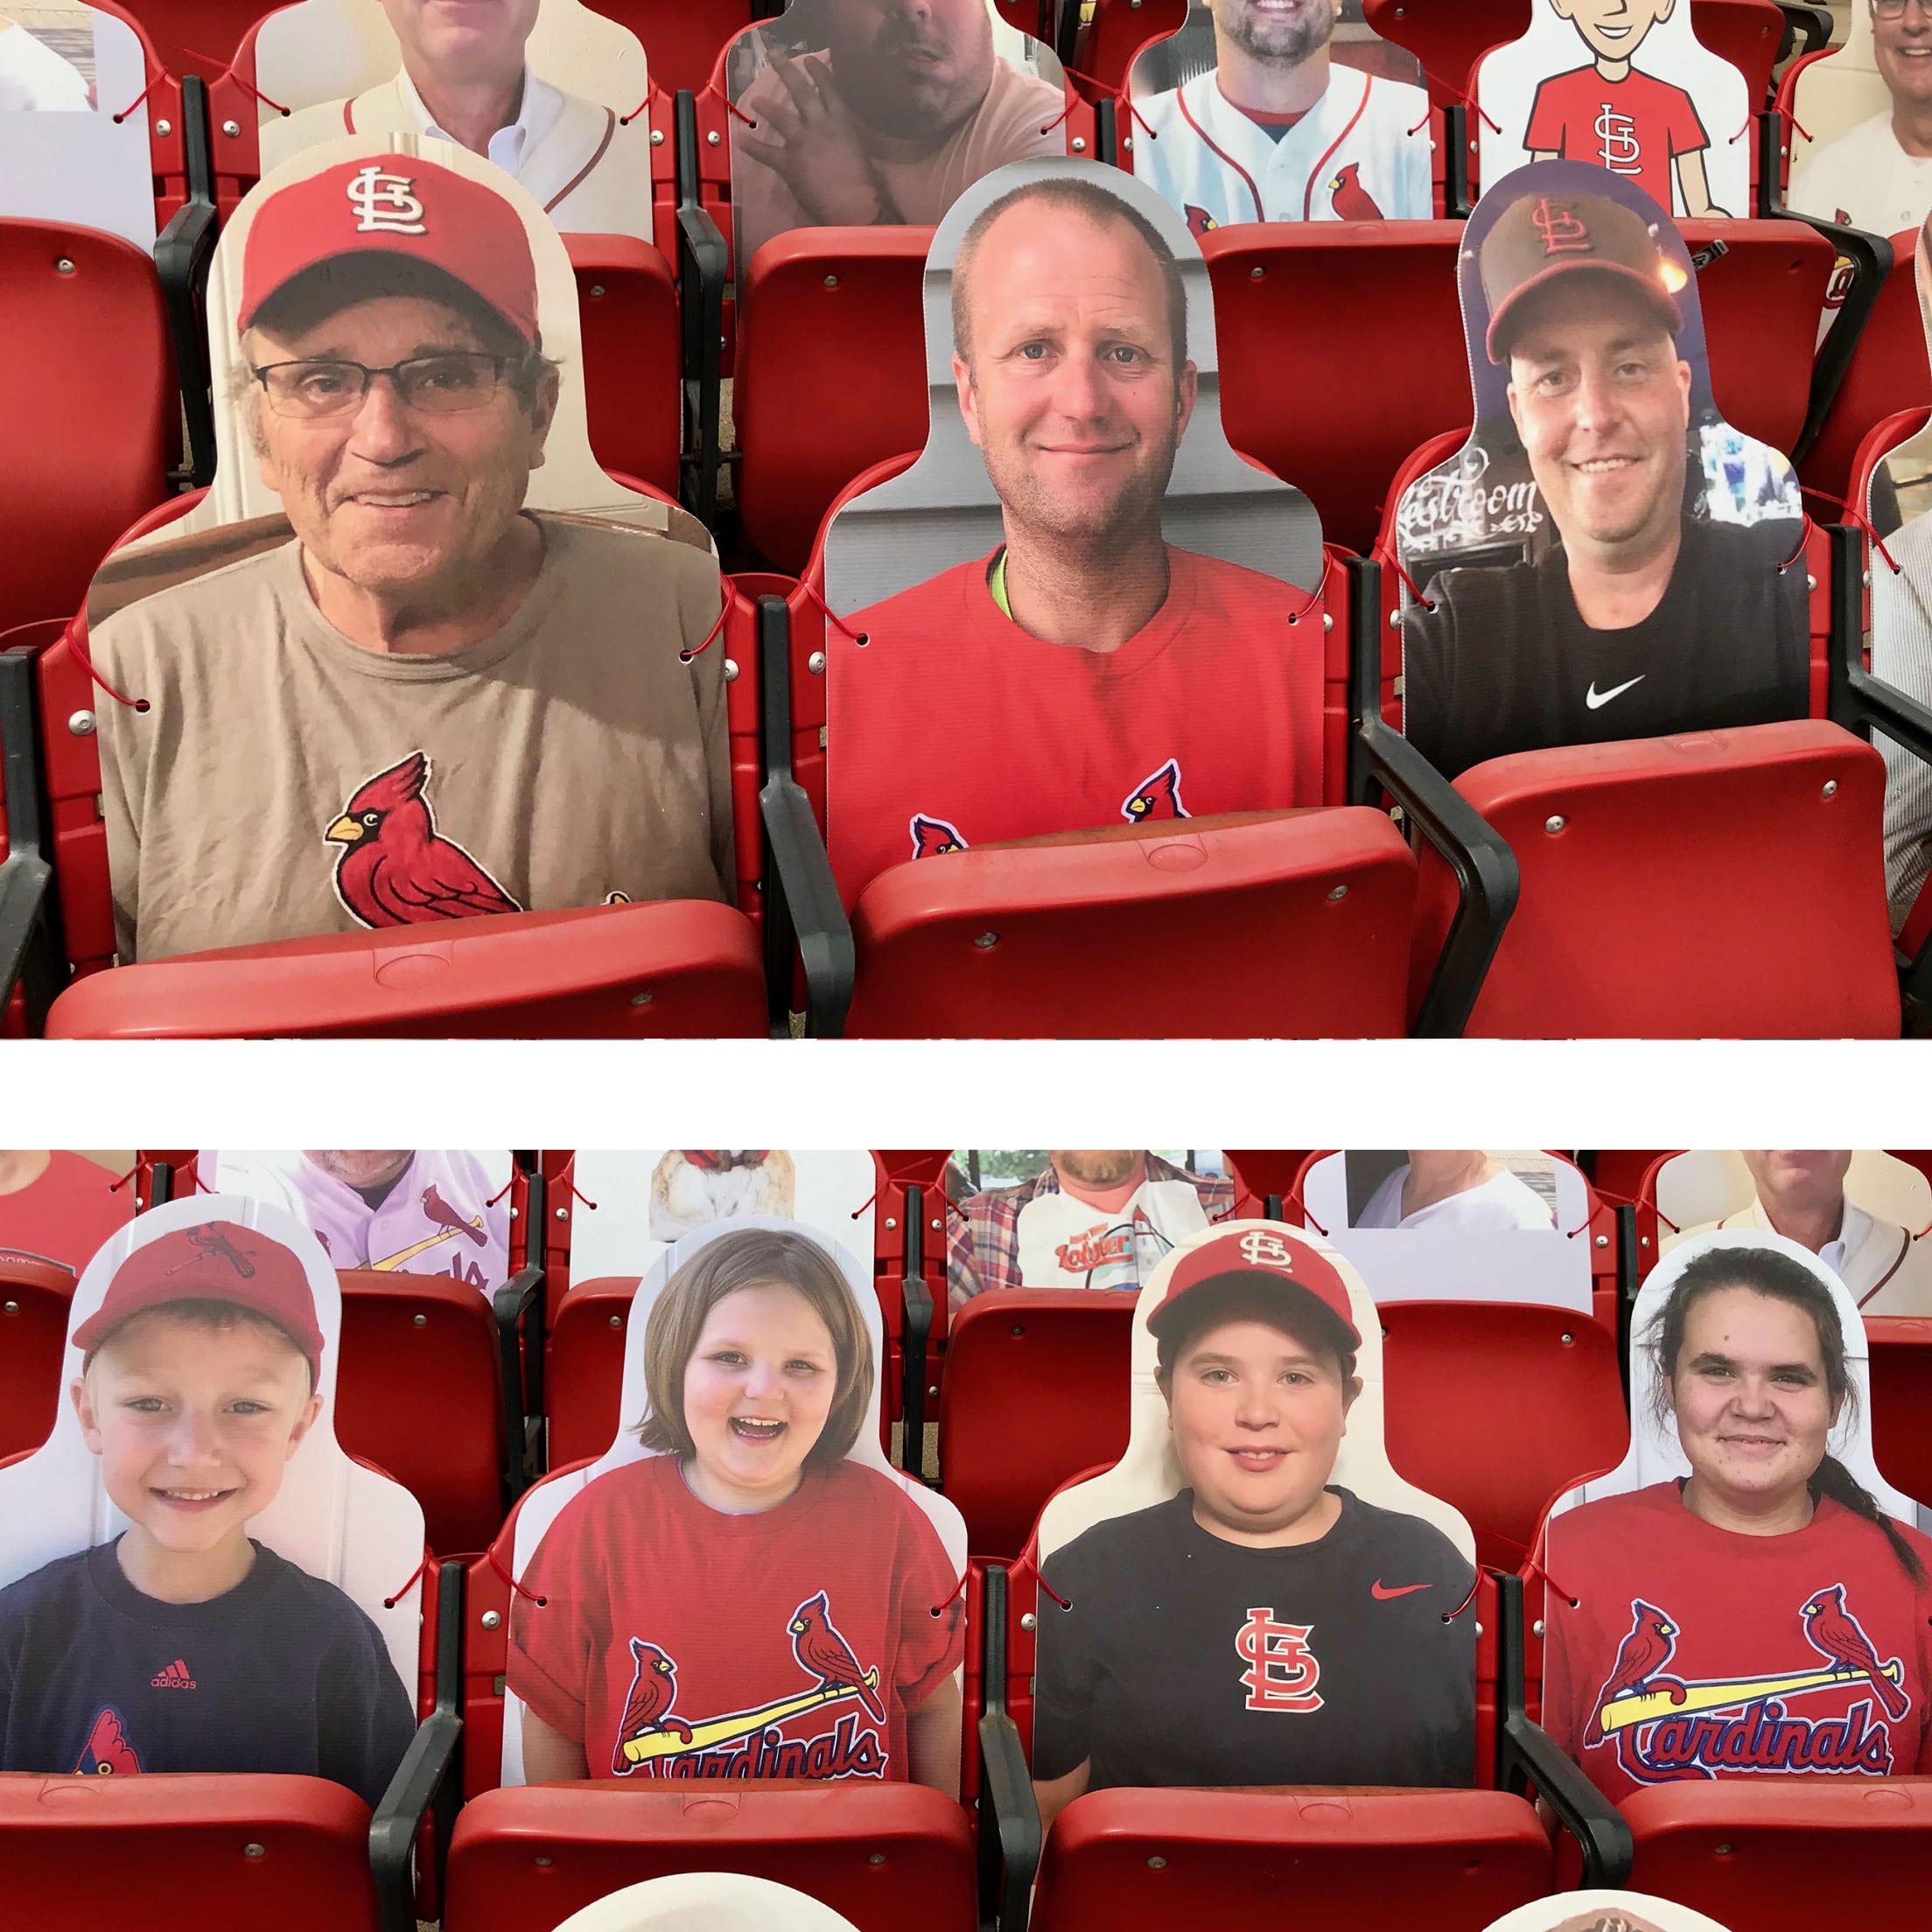 St. Louis Cardinals Cute Watching With Grandpa Toddler T-Shirt